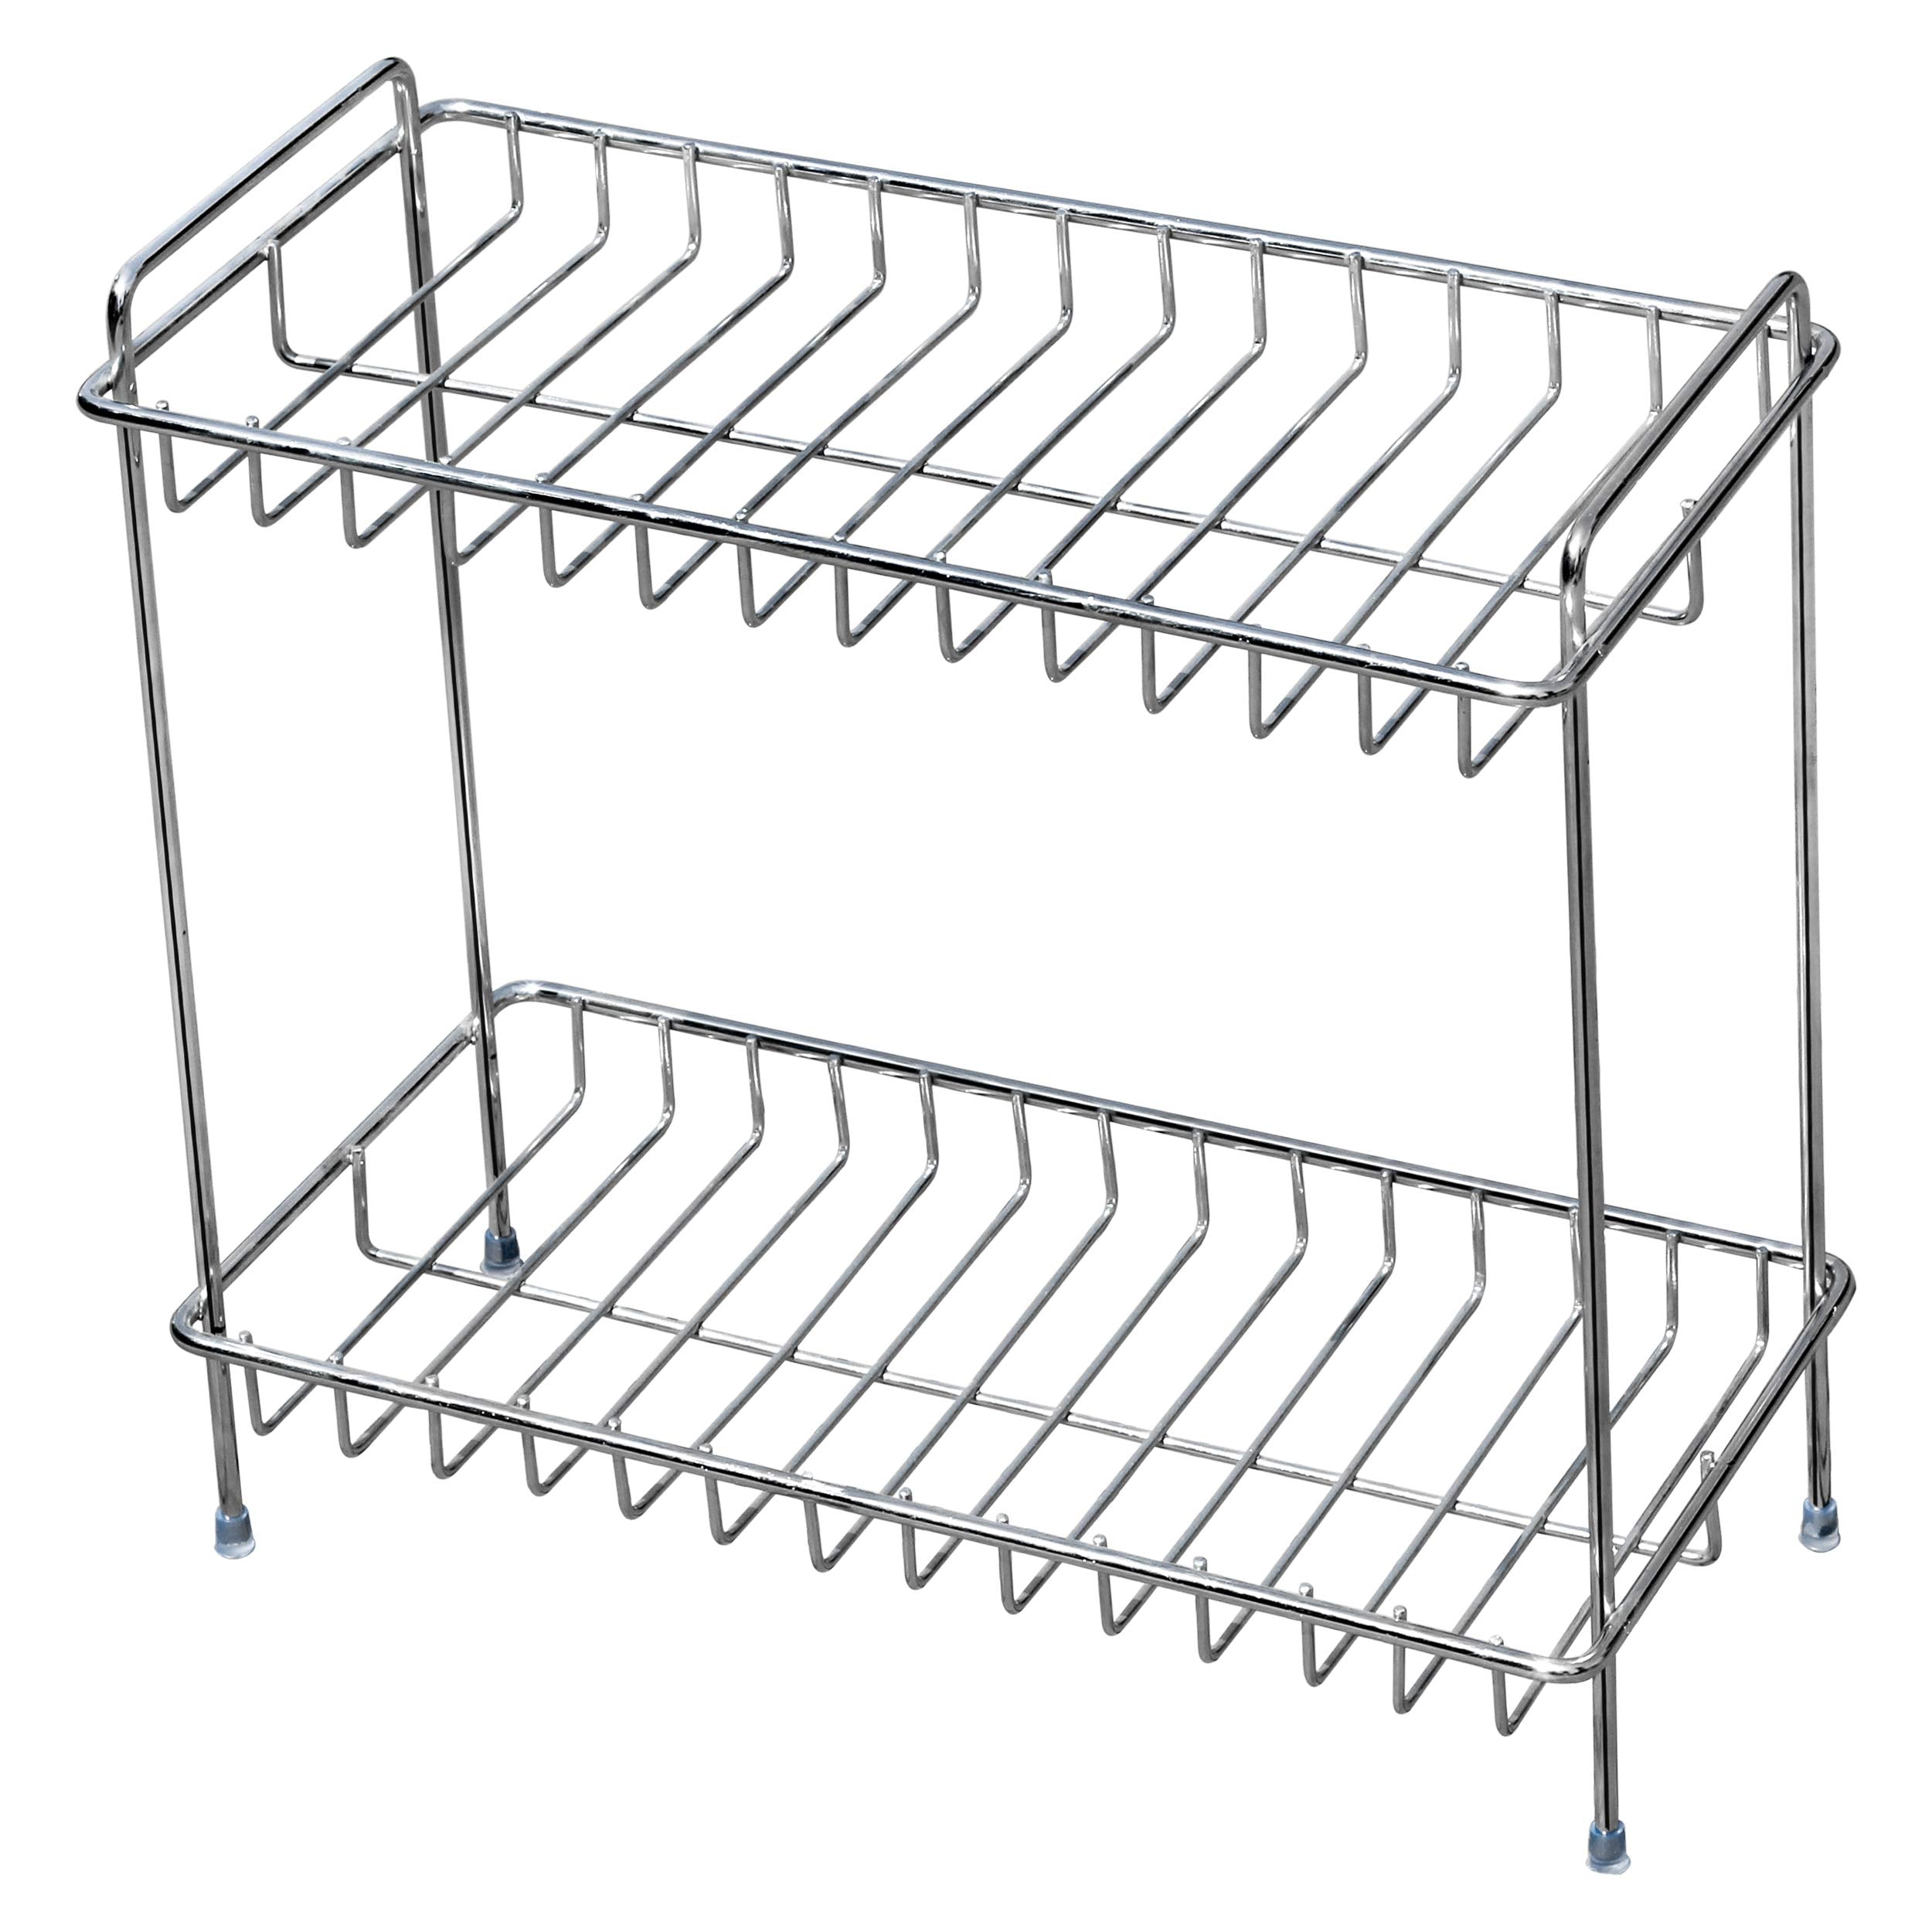 Plantex Stainless Steel Multipurpose 2-Tier Bathroom Organizer Shelf/Rack/Stand/Organizer/Bathroom Accessories (Chrome)